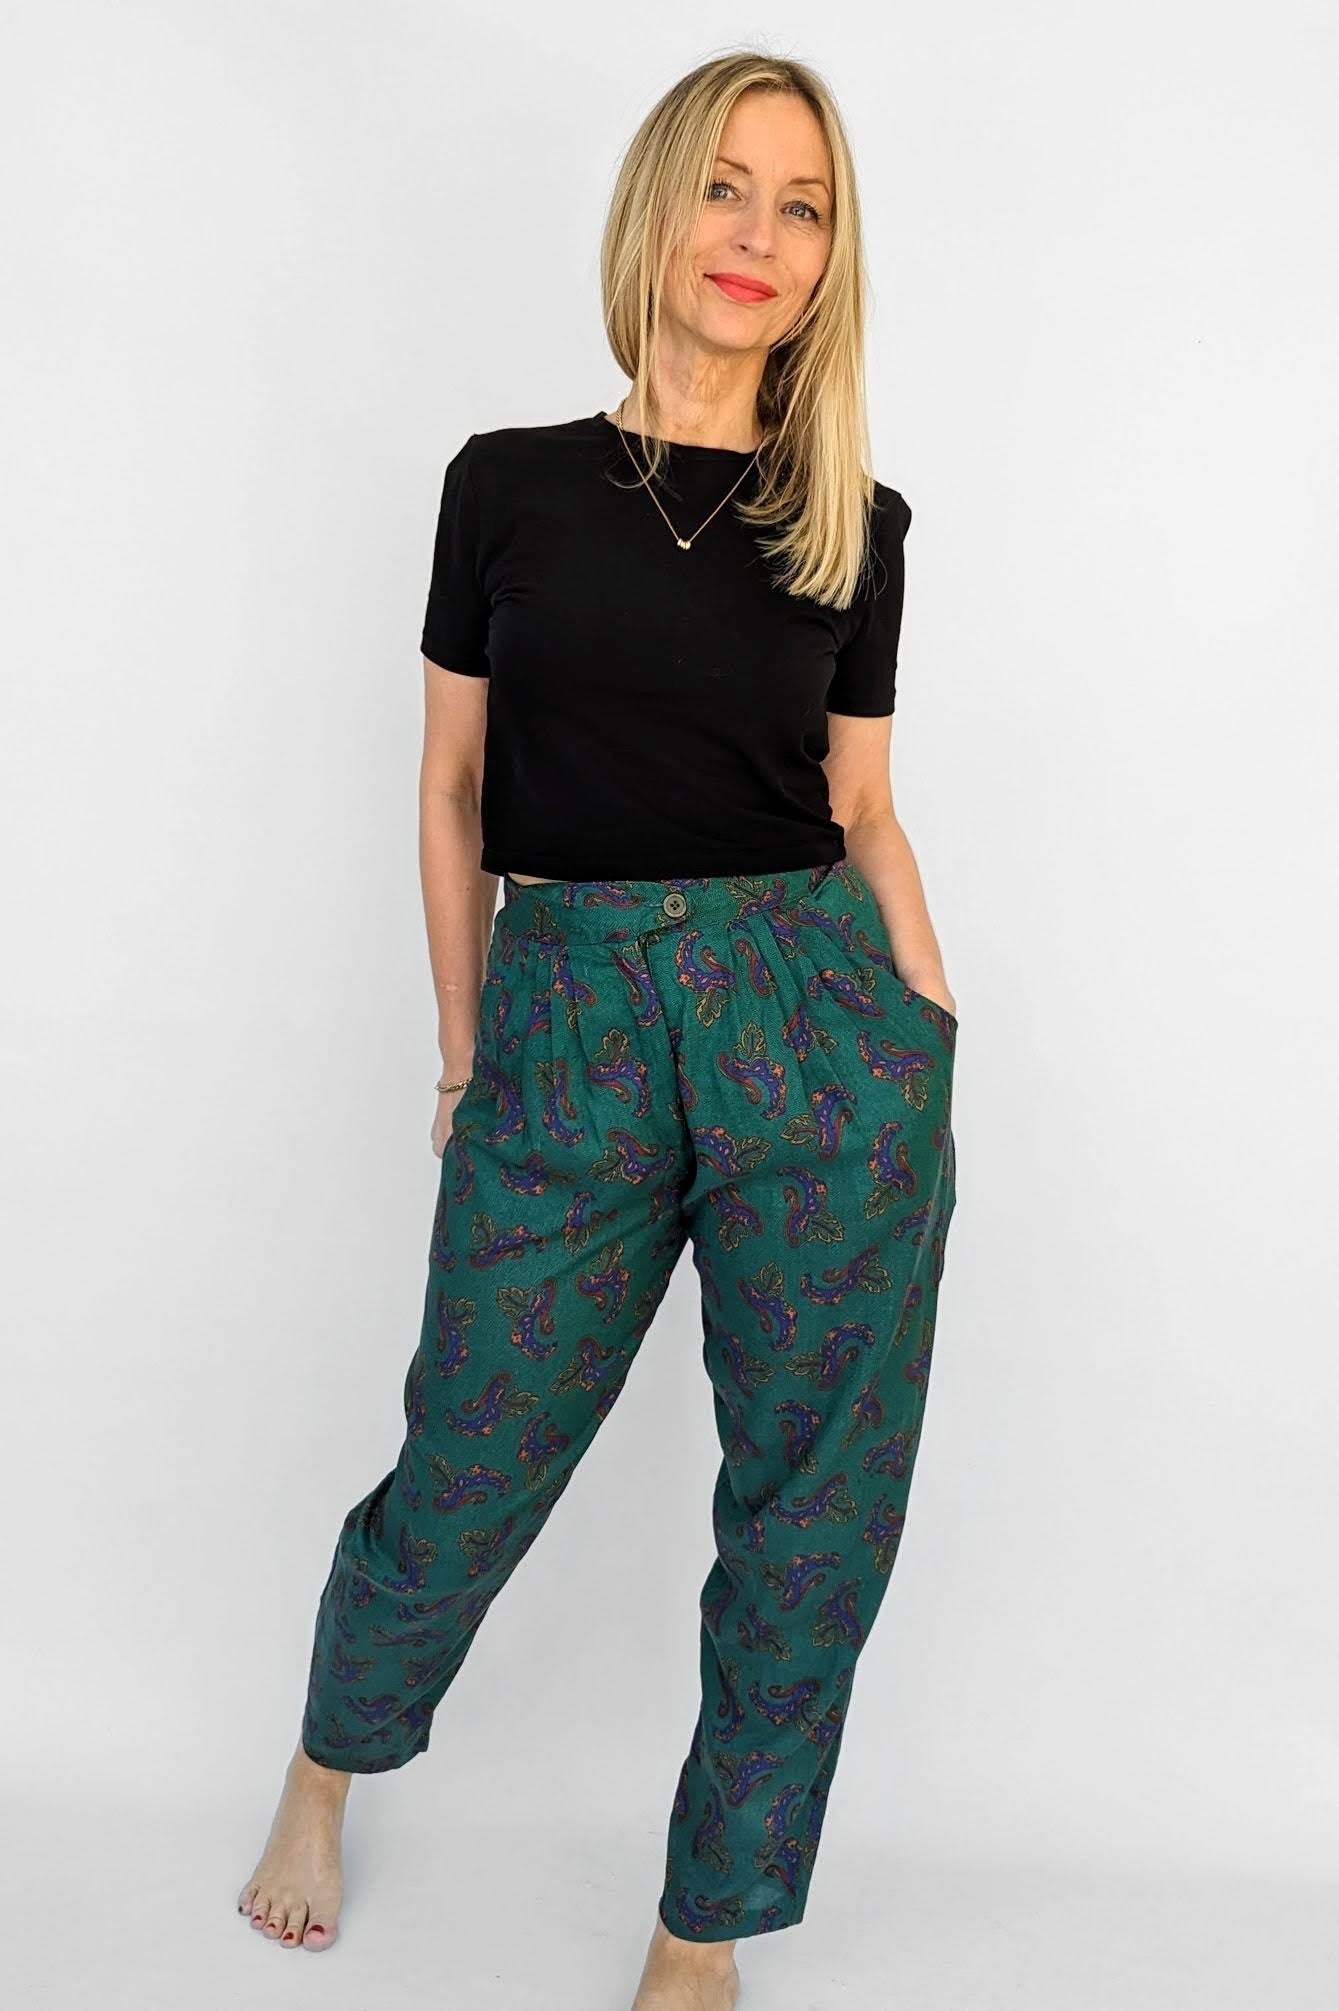 Diane von Furstenberg 80s vintage green paisley trousers